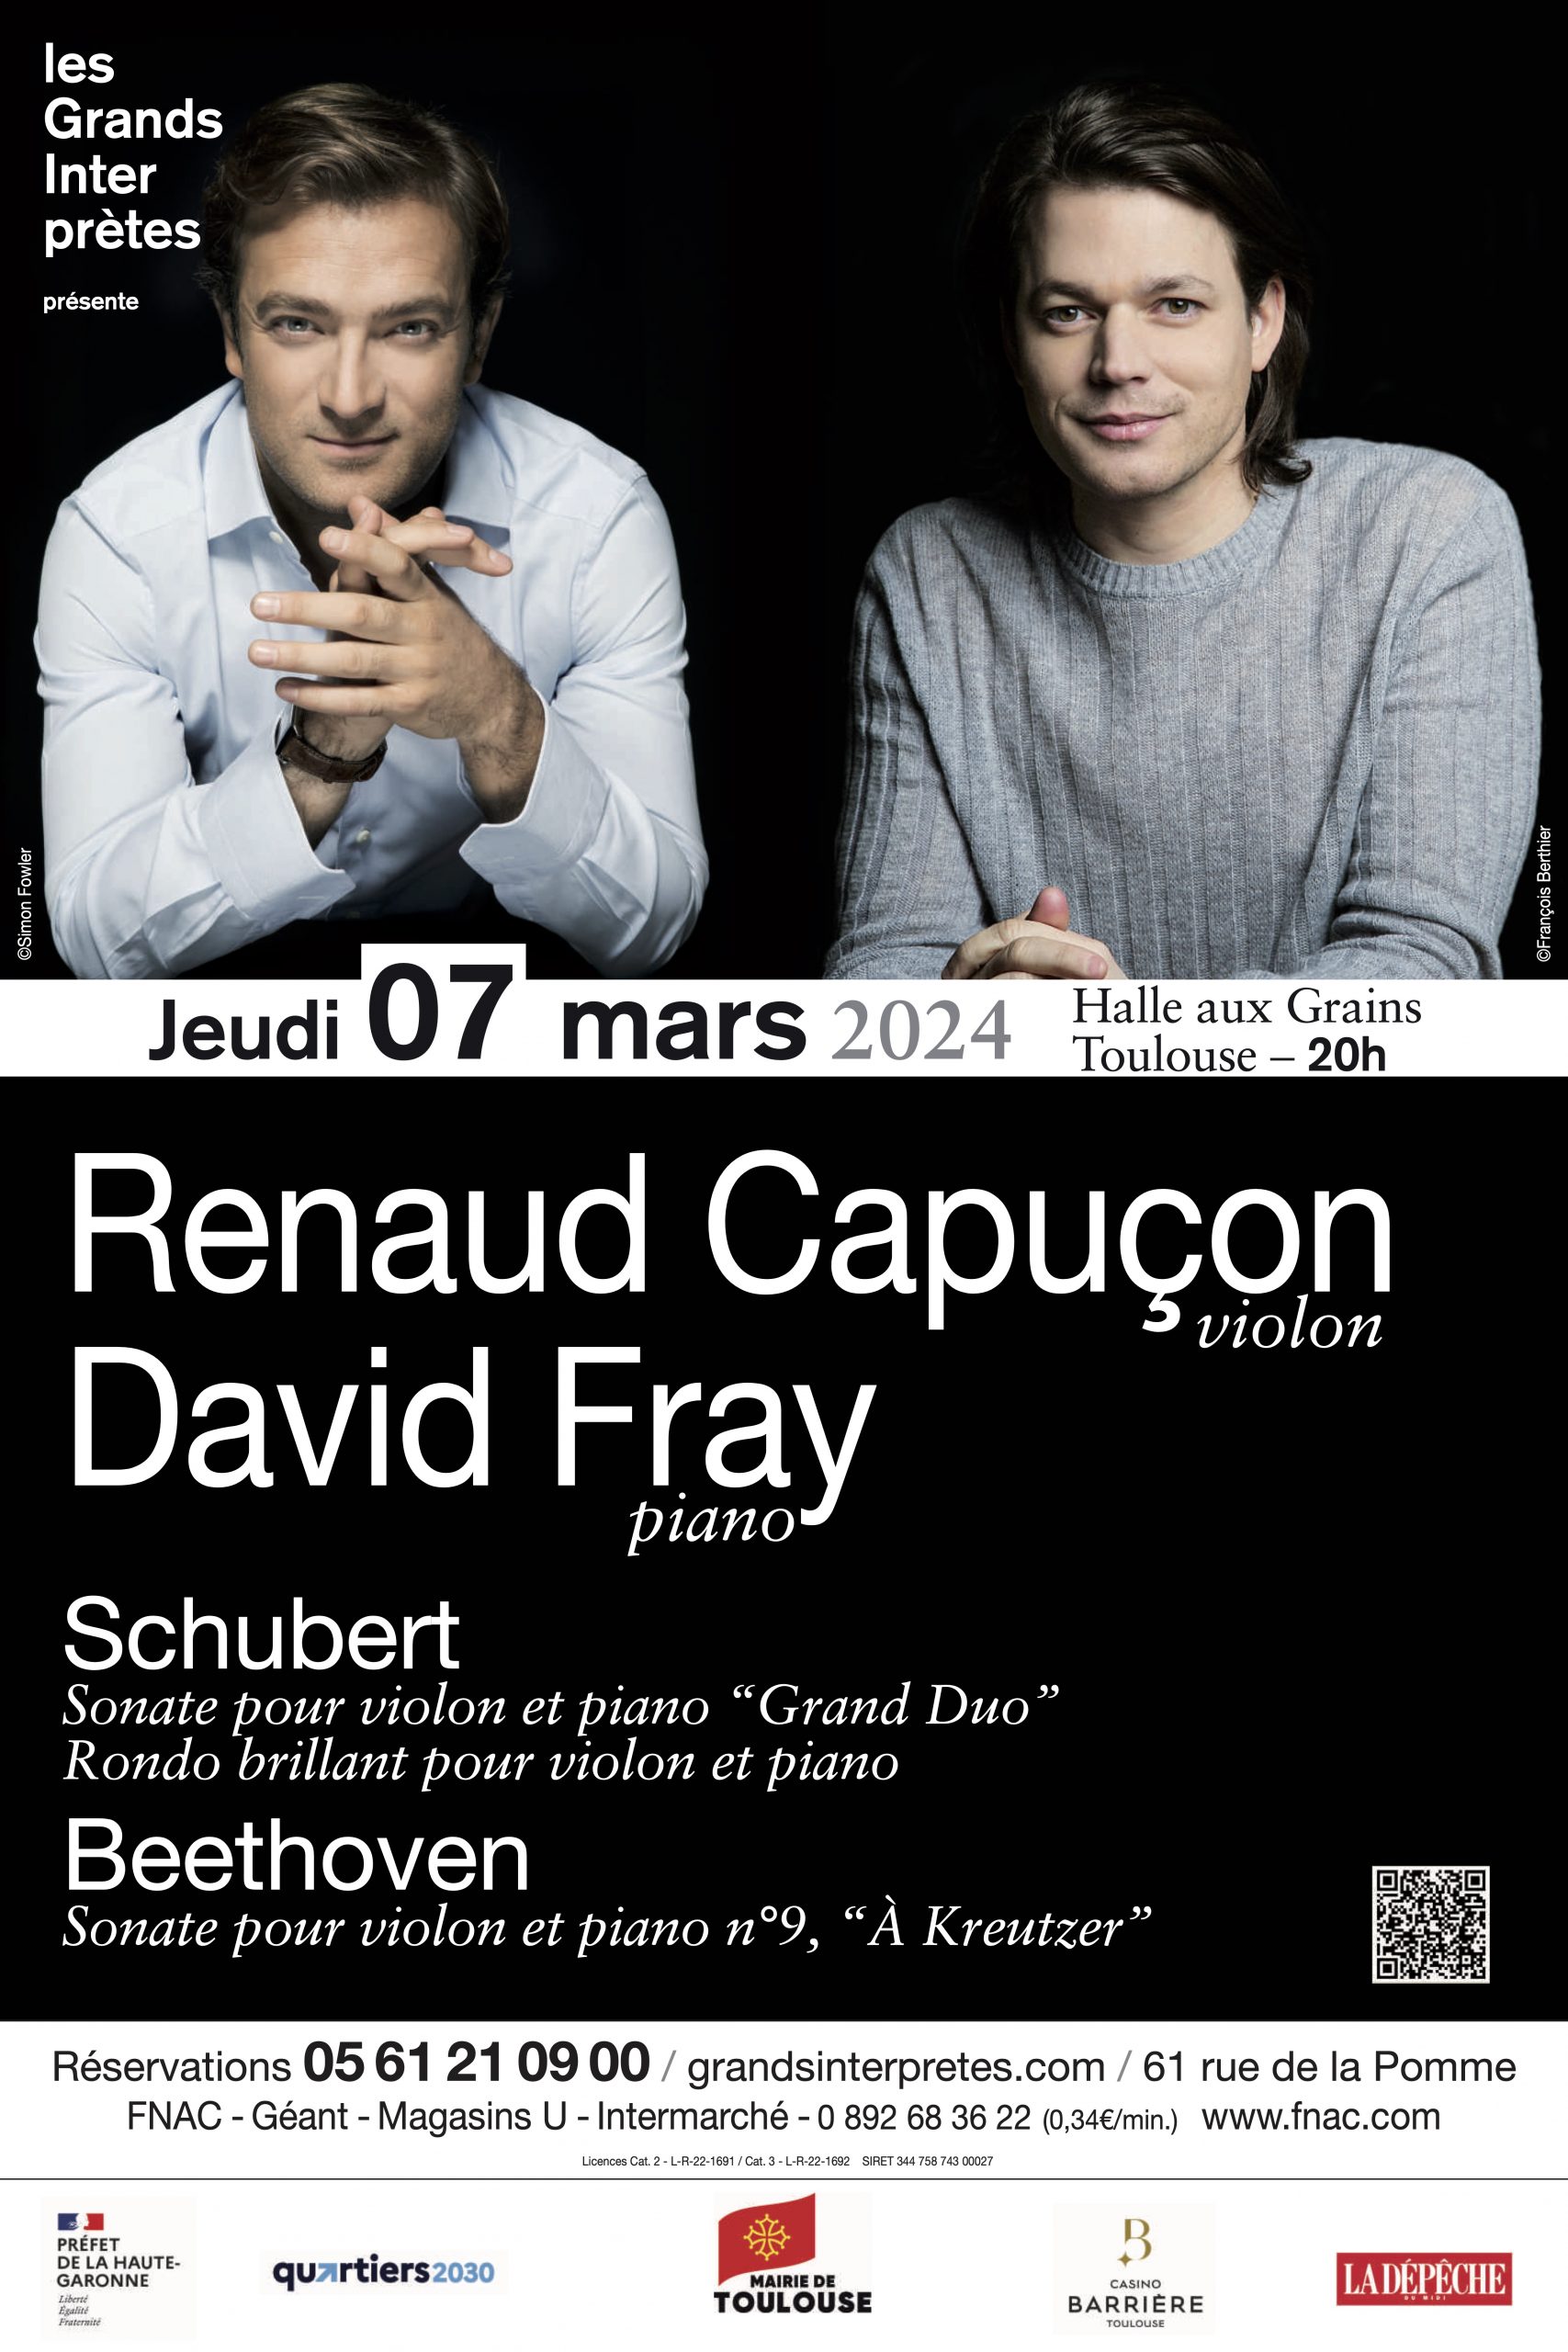 Les Grands Interprètes Renaud Capuçon Et David Fray